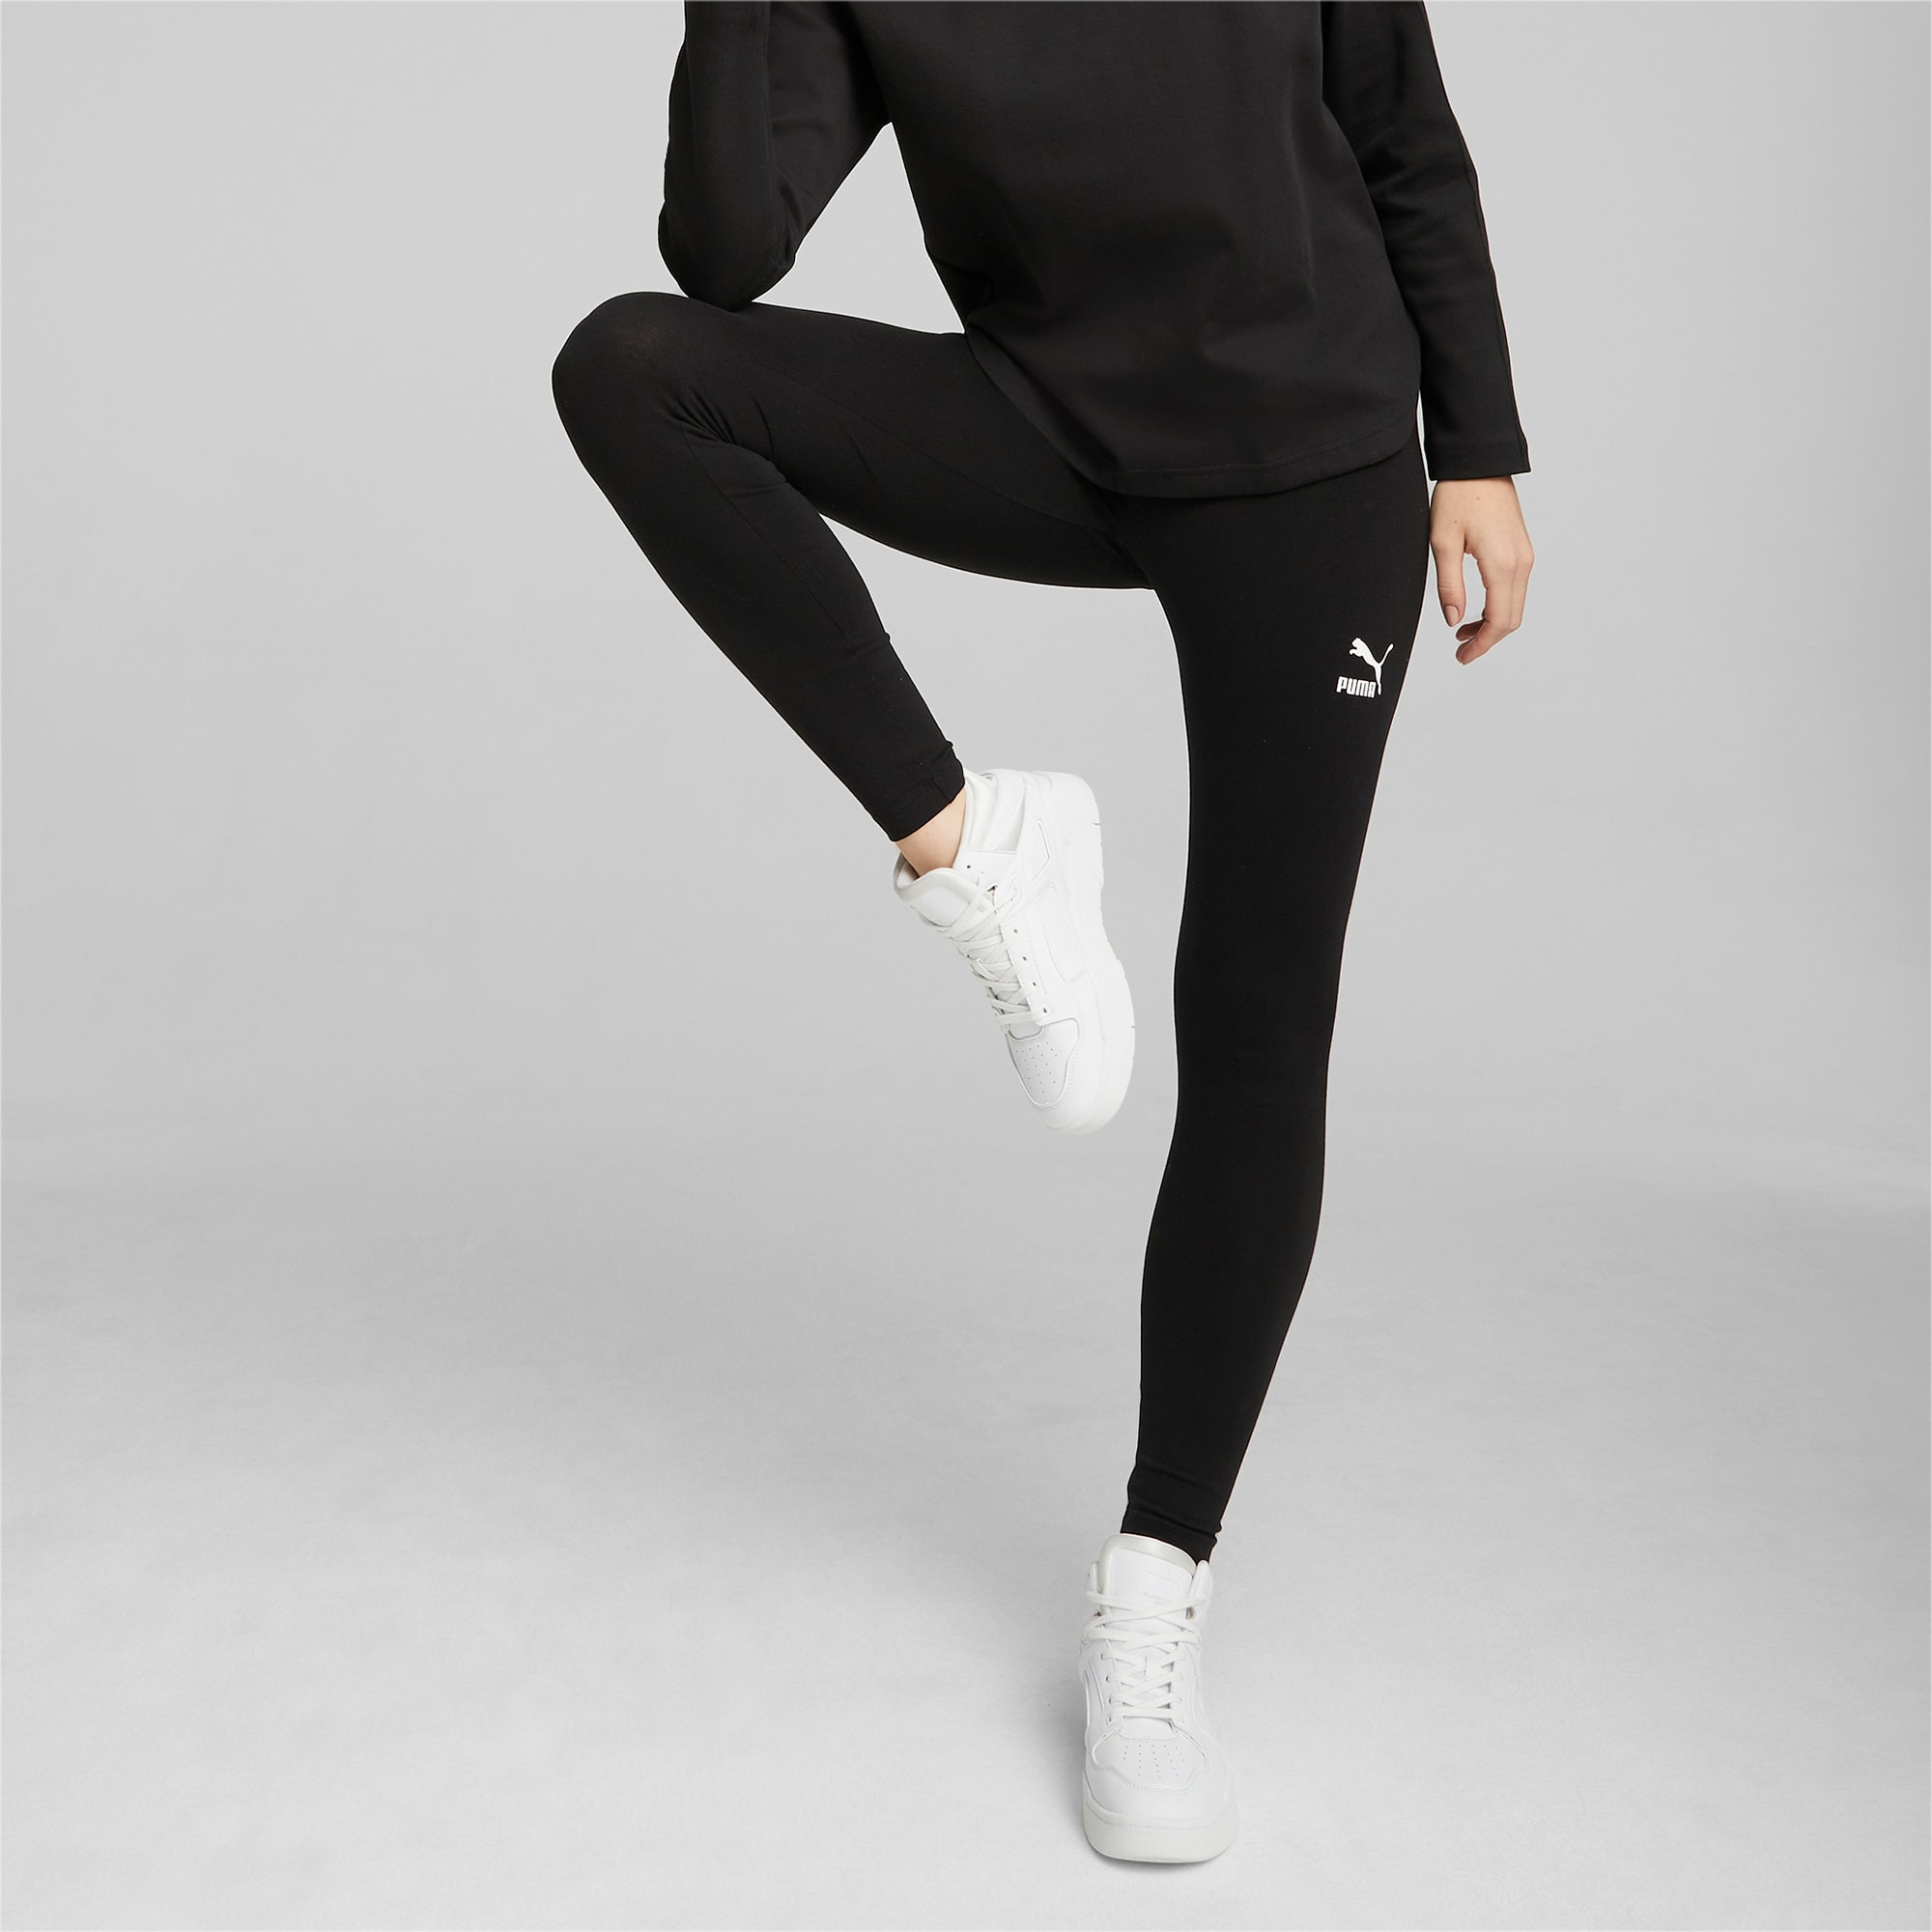 Buy Romastory Women's Elastic Shiny Leggings Pants High Waisted Shining  Sports Workout Leggings Tights (Small, Black) at